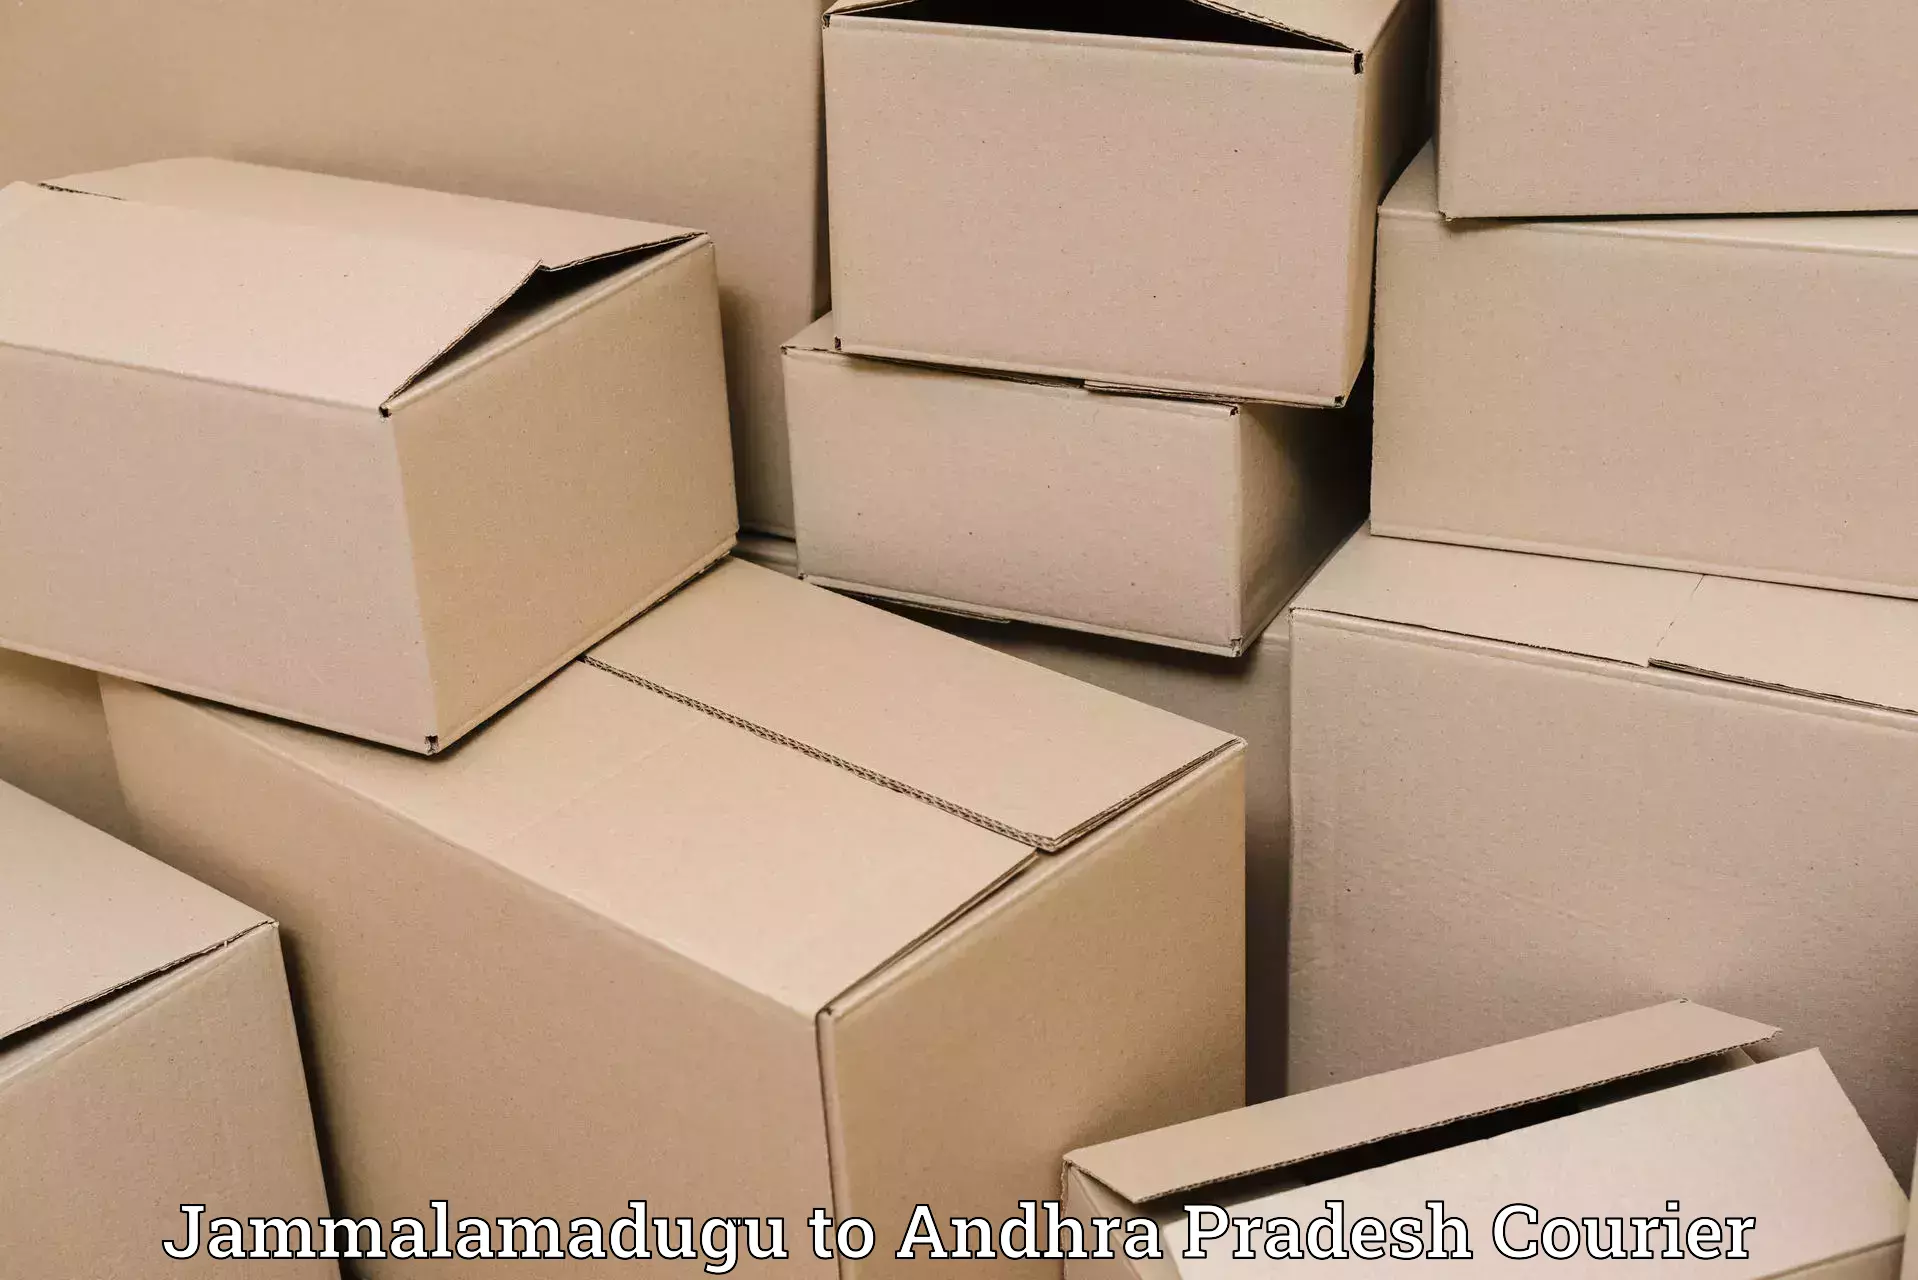 Full-service courier options Jammalamadugu to Kadapa